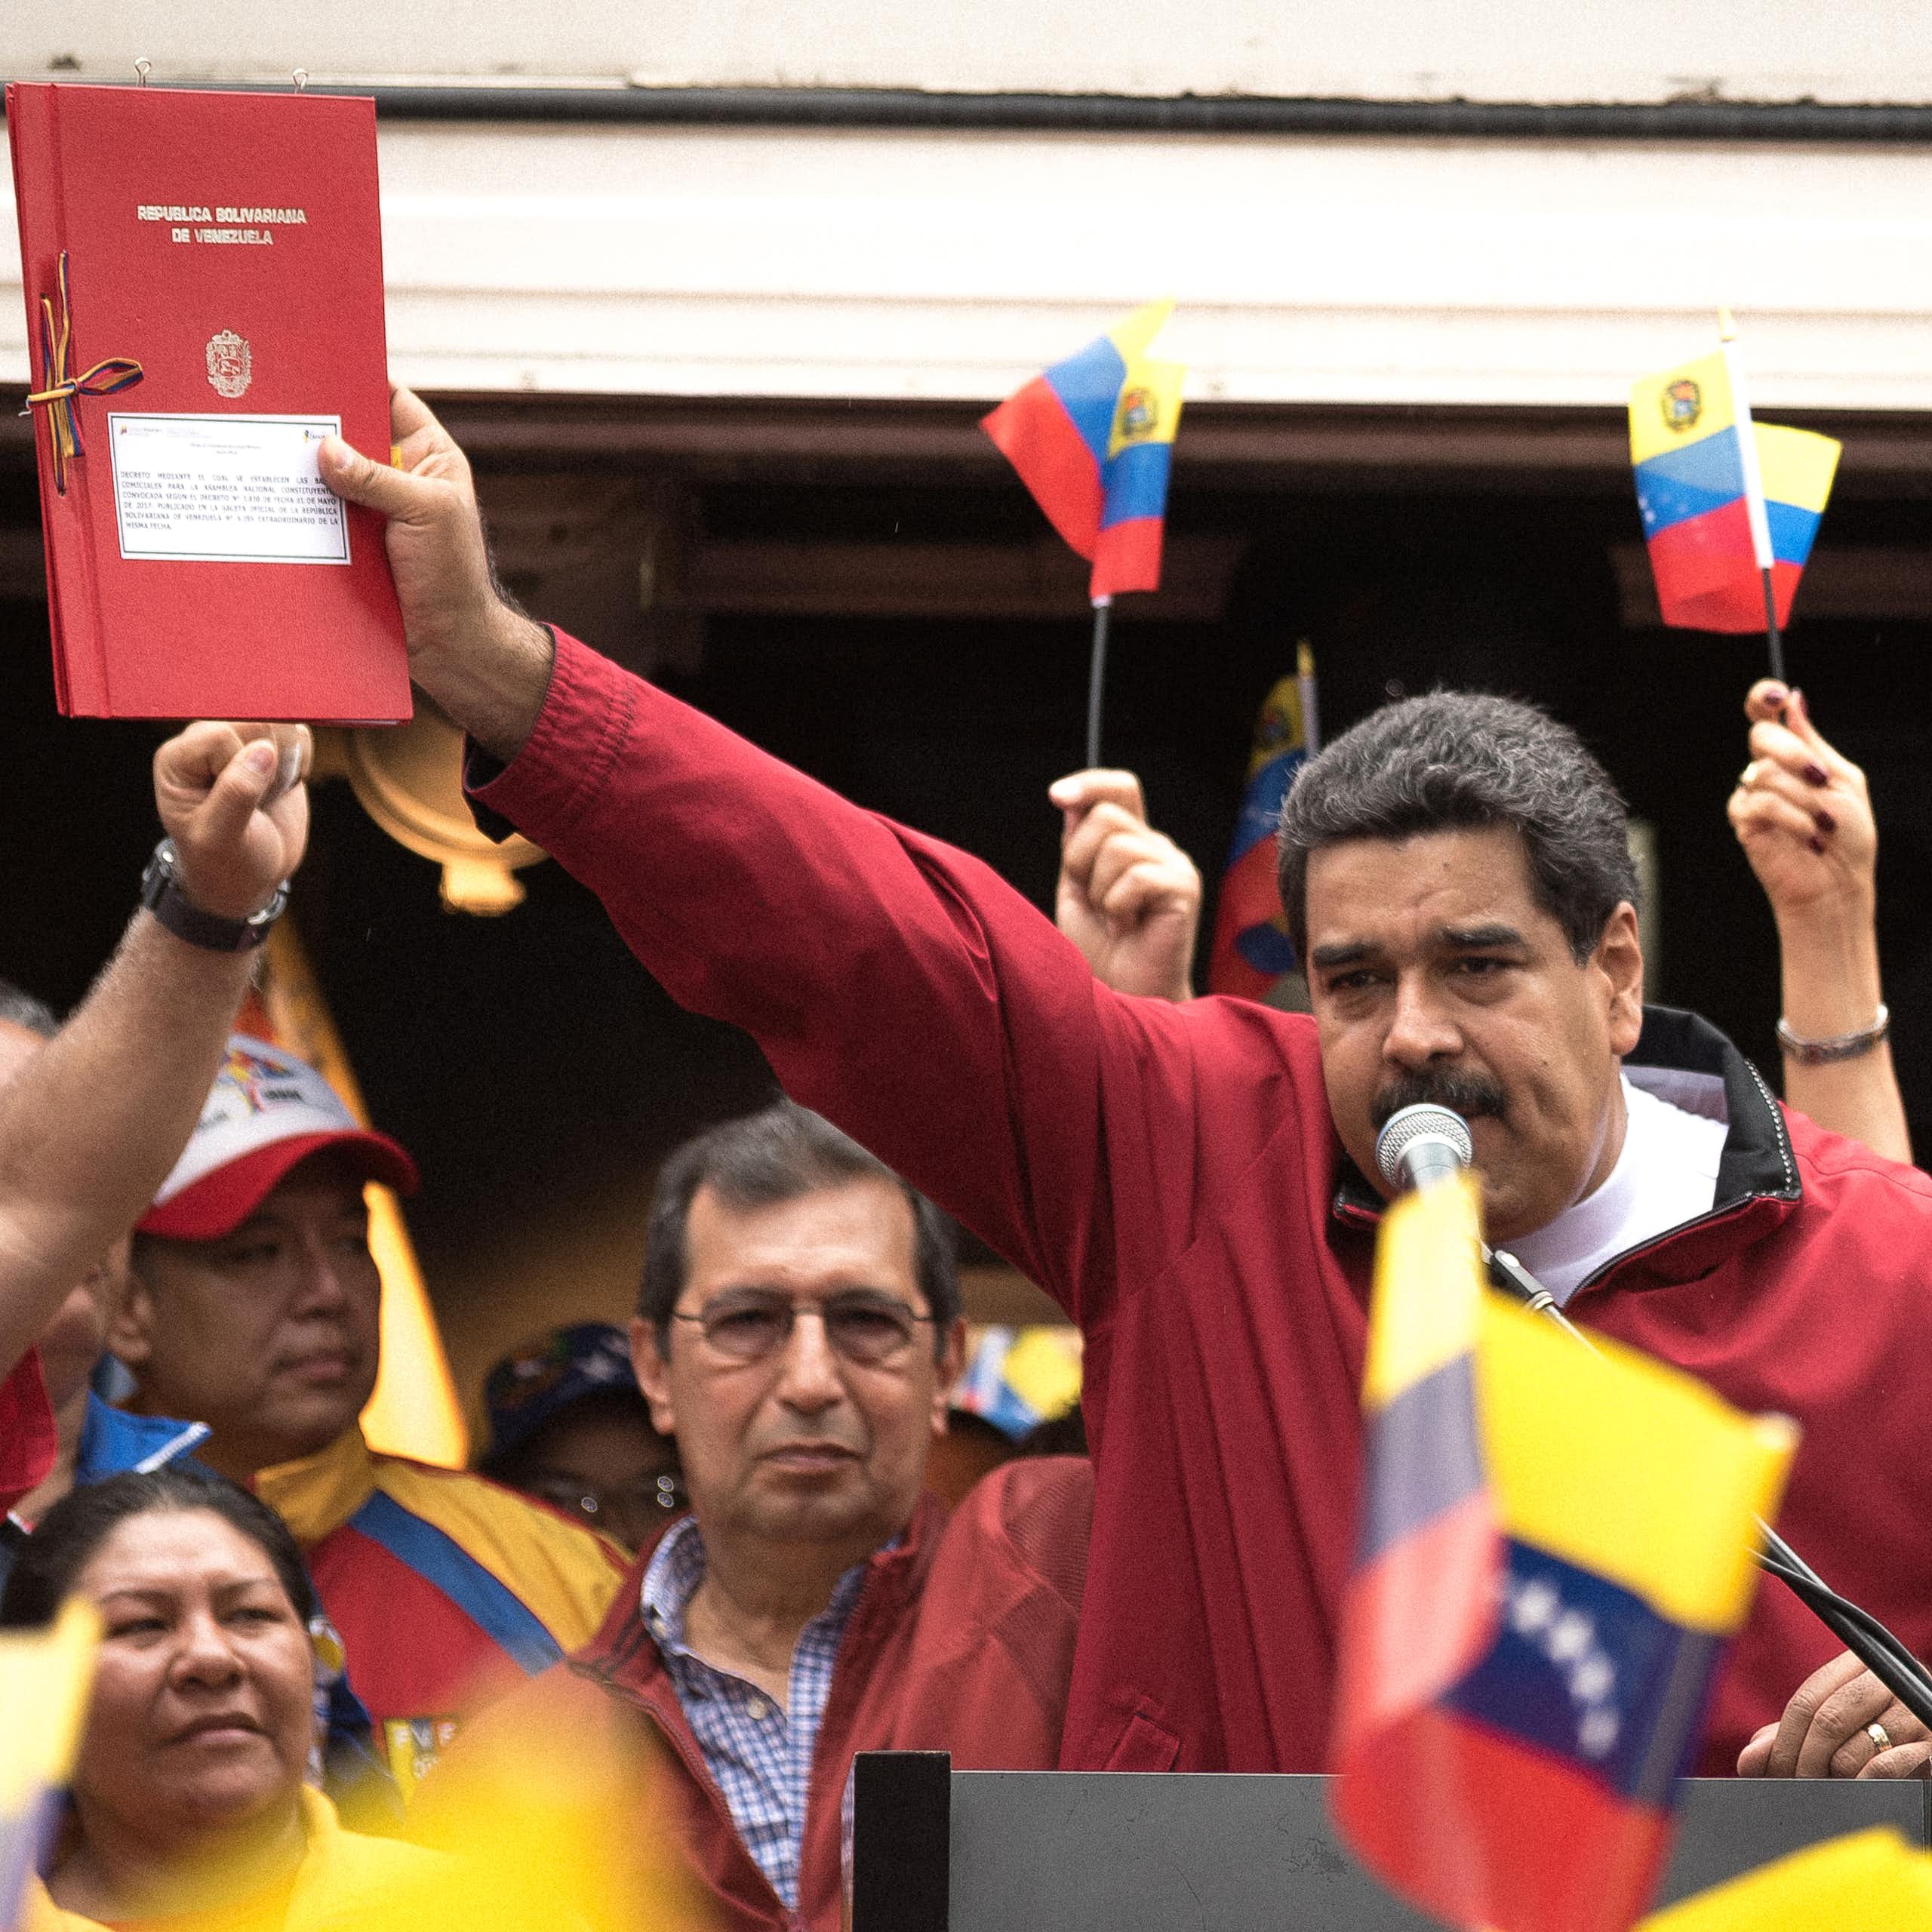 Venezuelan president Nicolas Maduro holding a red book with Venezuela flags waving around him.